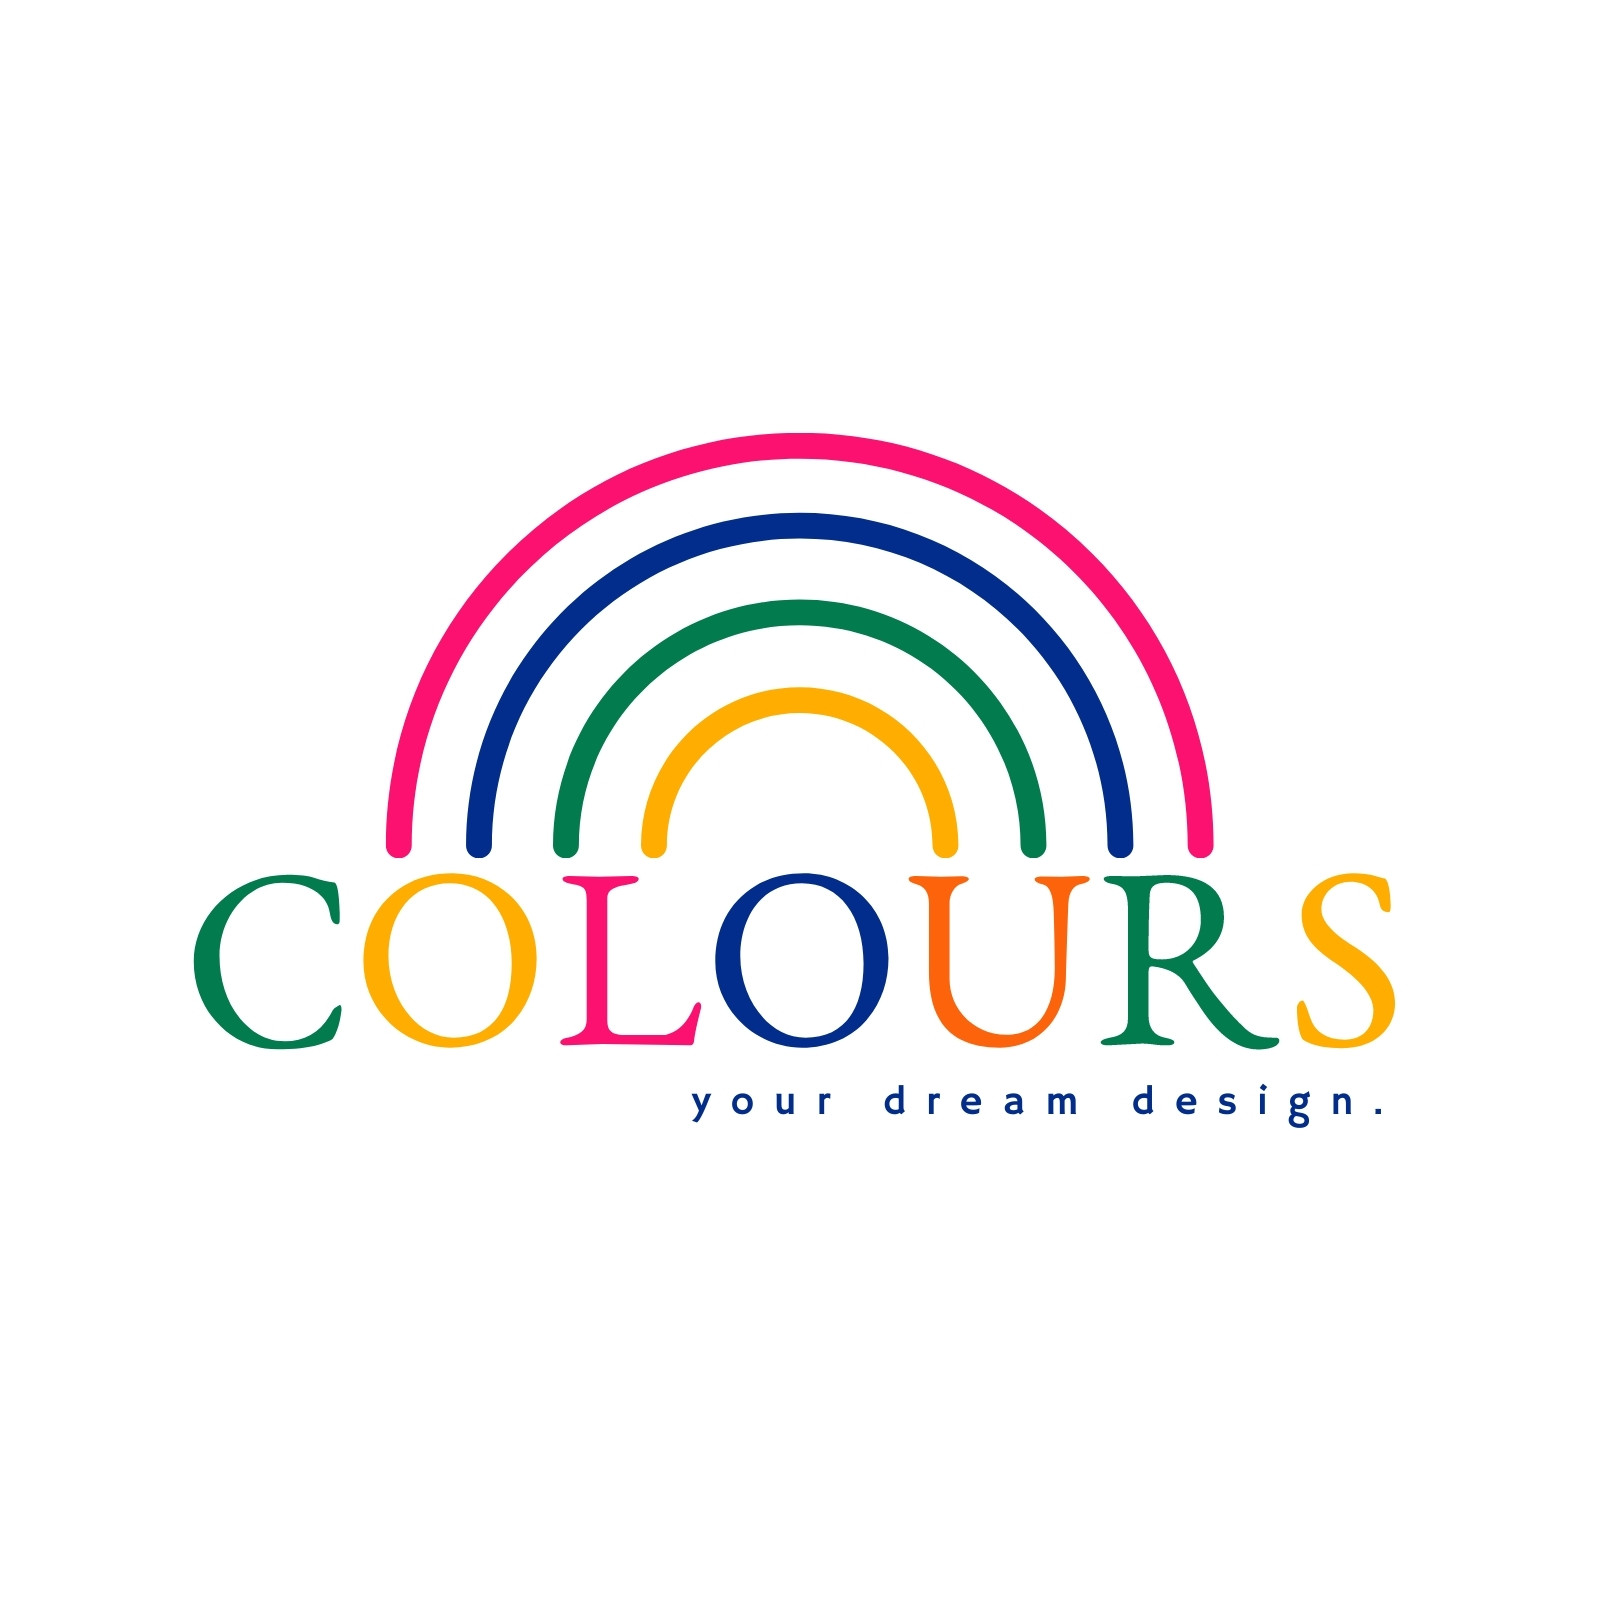 Circle people diversity multicolor logo Royalty Free Vector